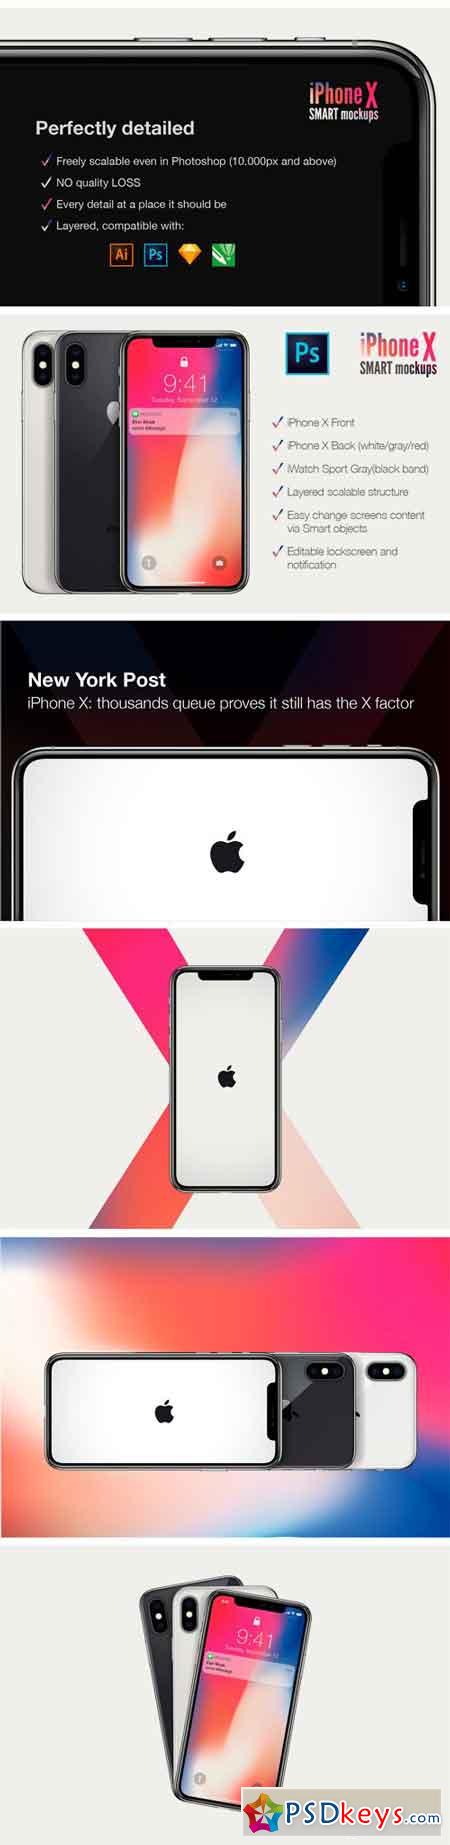 Apple iPhone X mockups (PSD+AI) 2283739